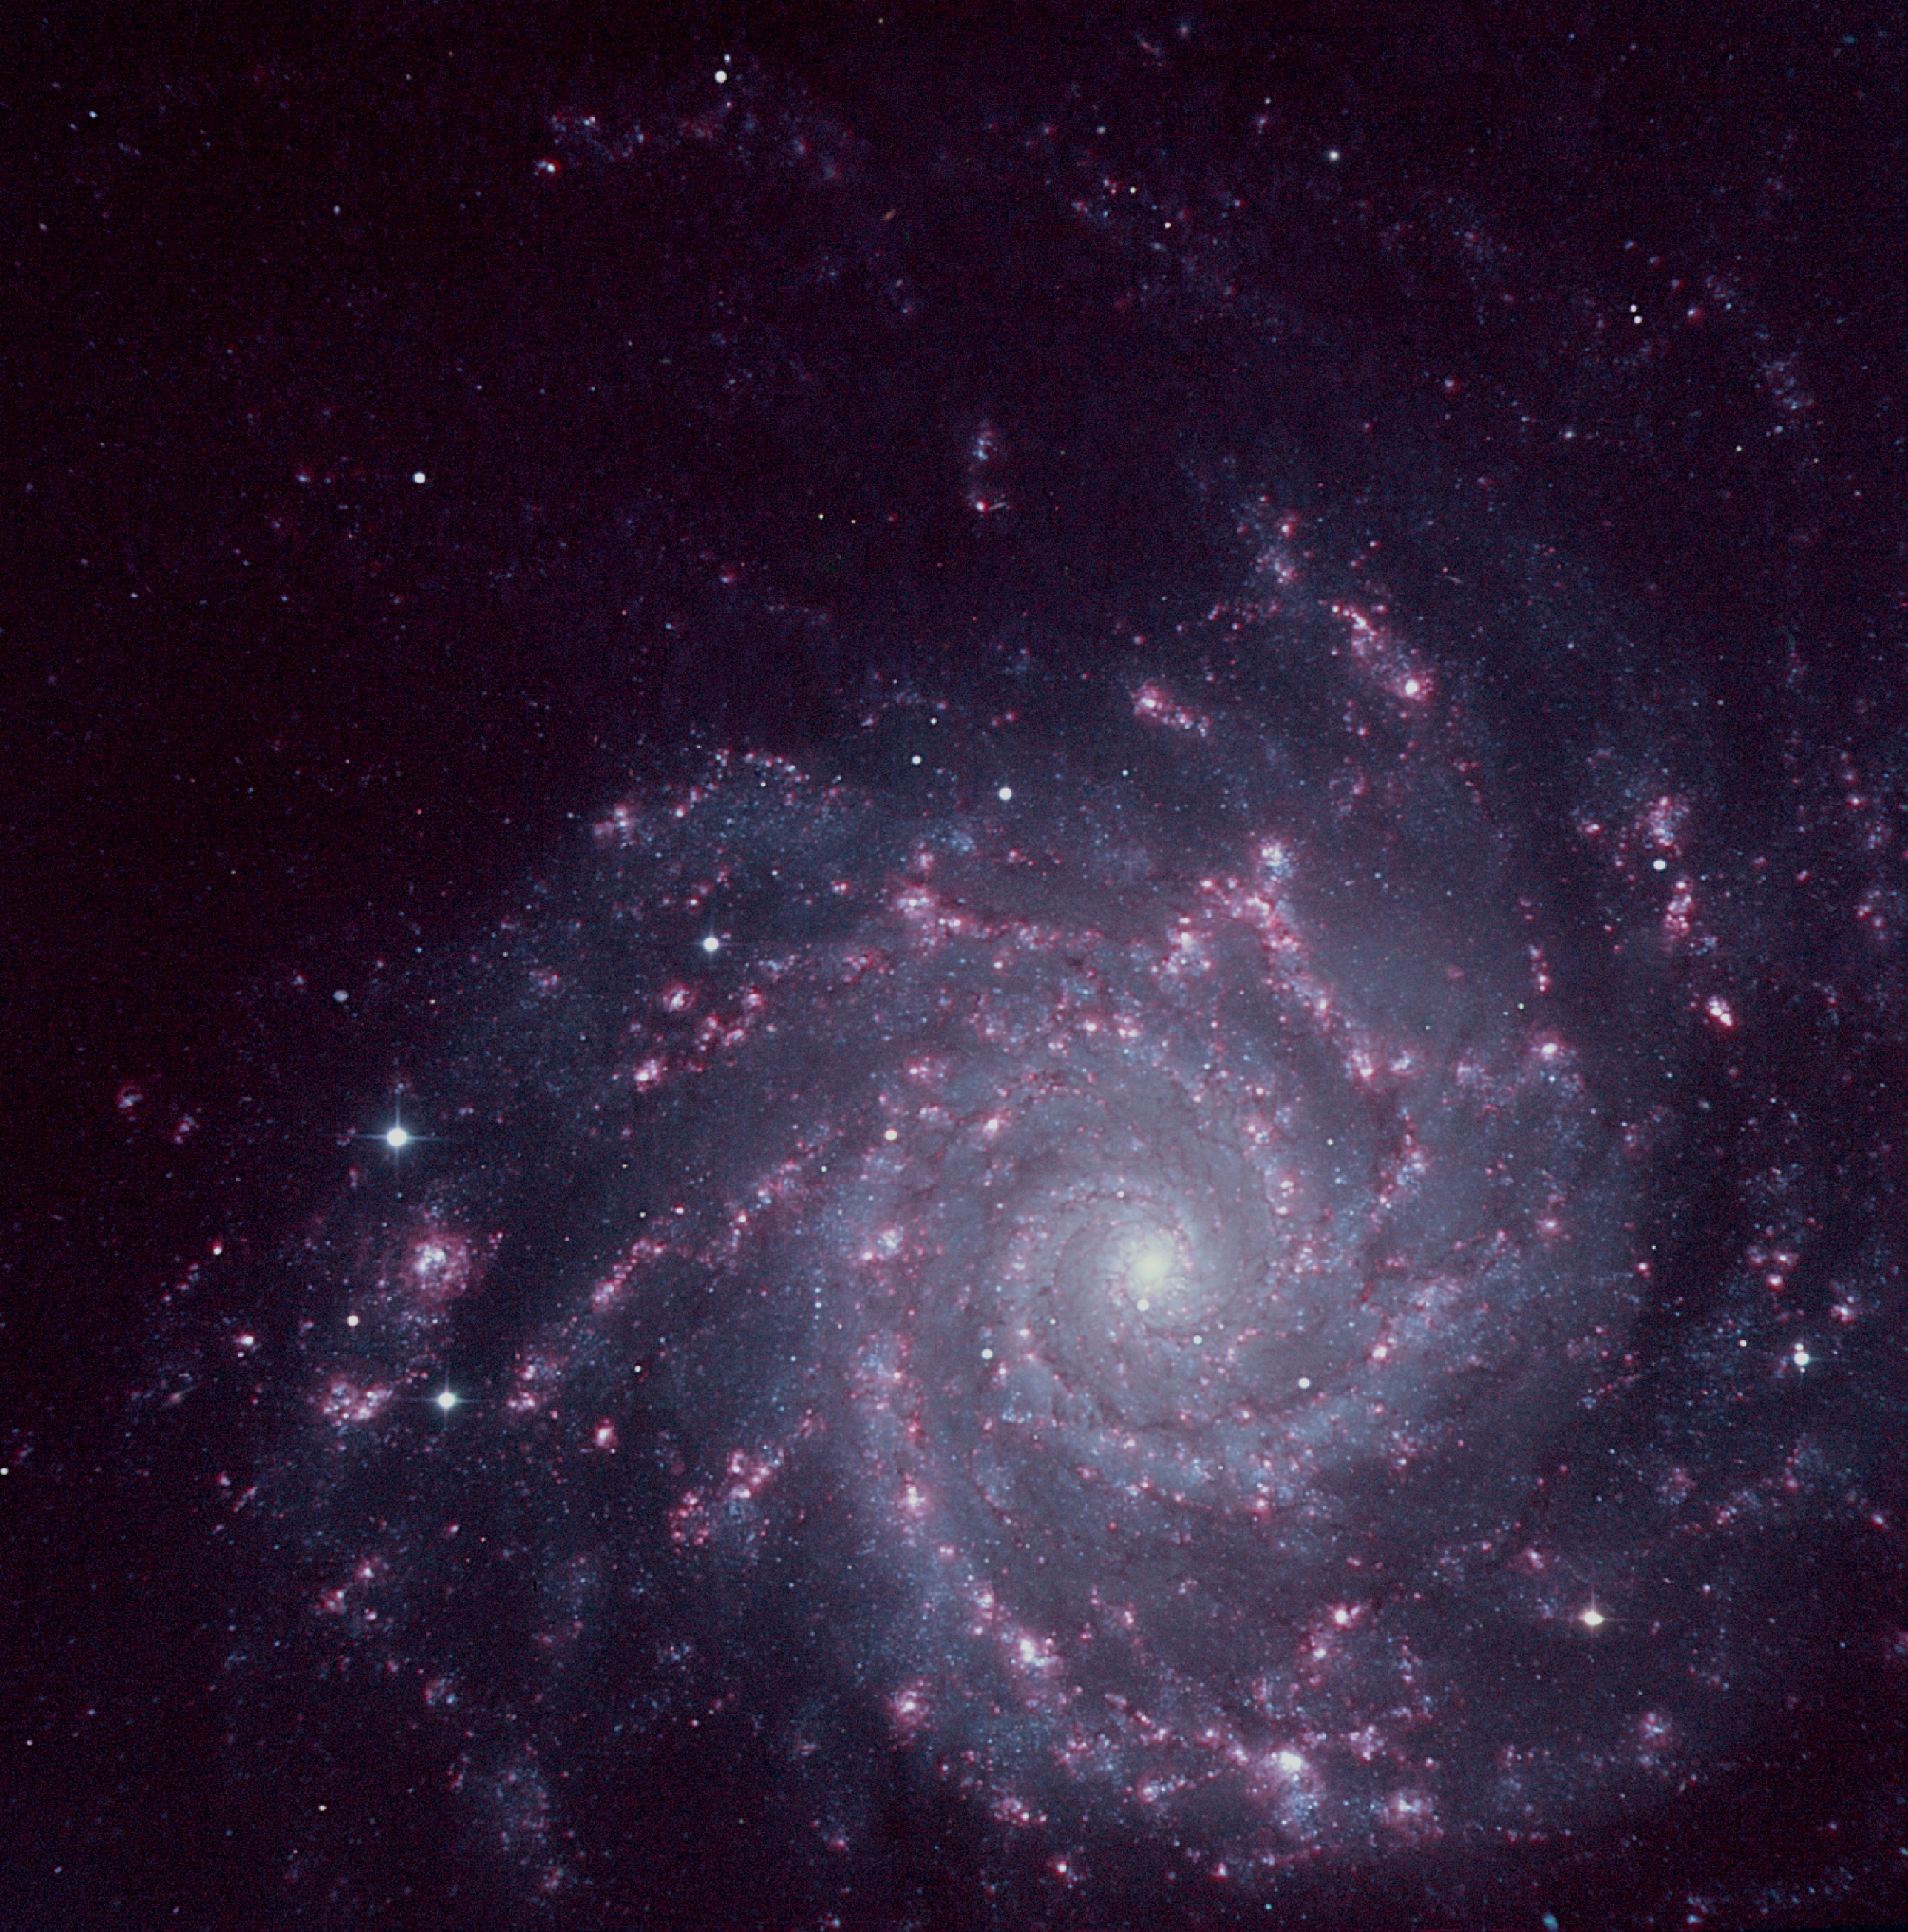 The spiral galaxy NGC 628.